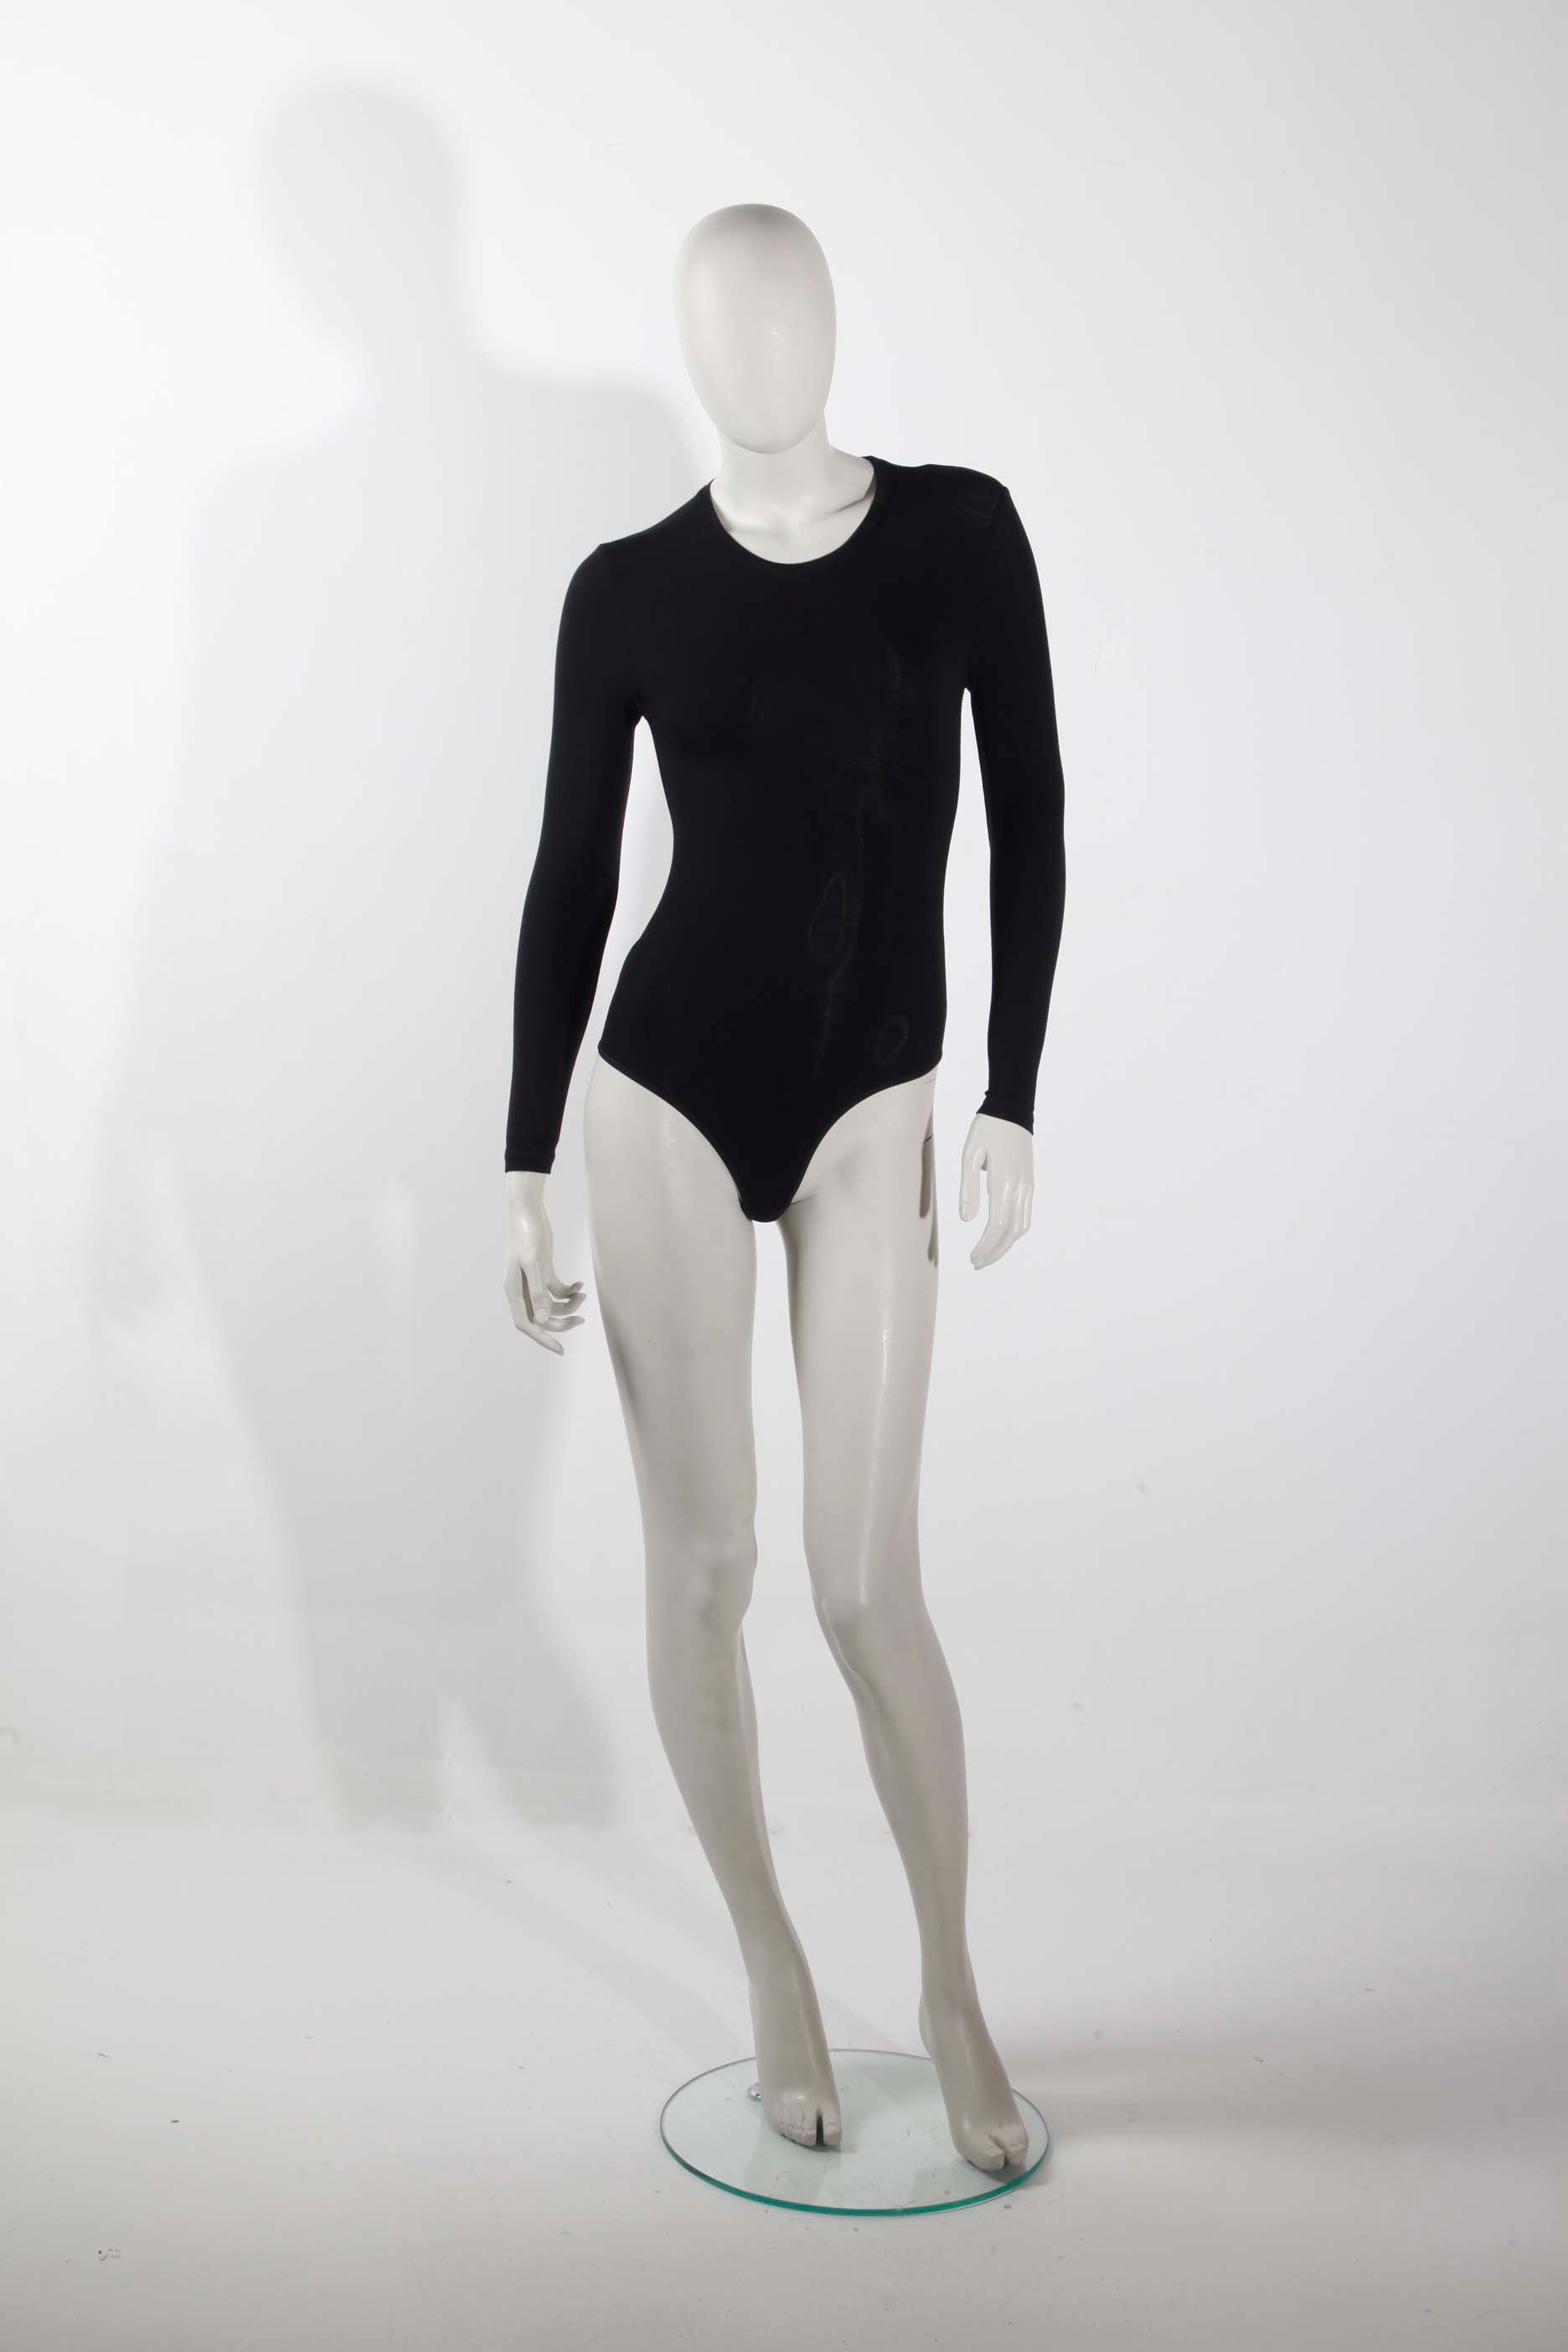 Skinny Black Bodysuit (Eu36-38)